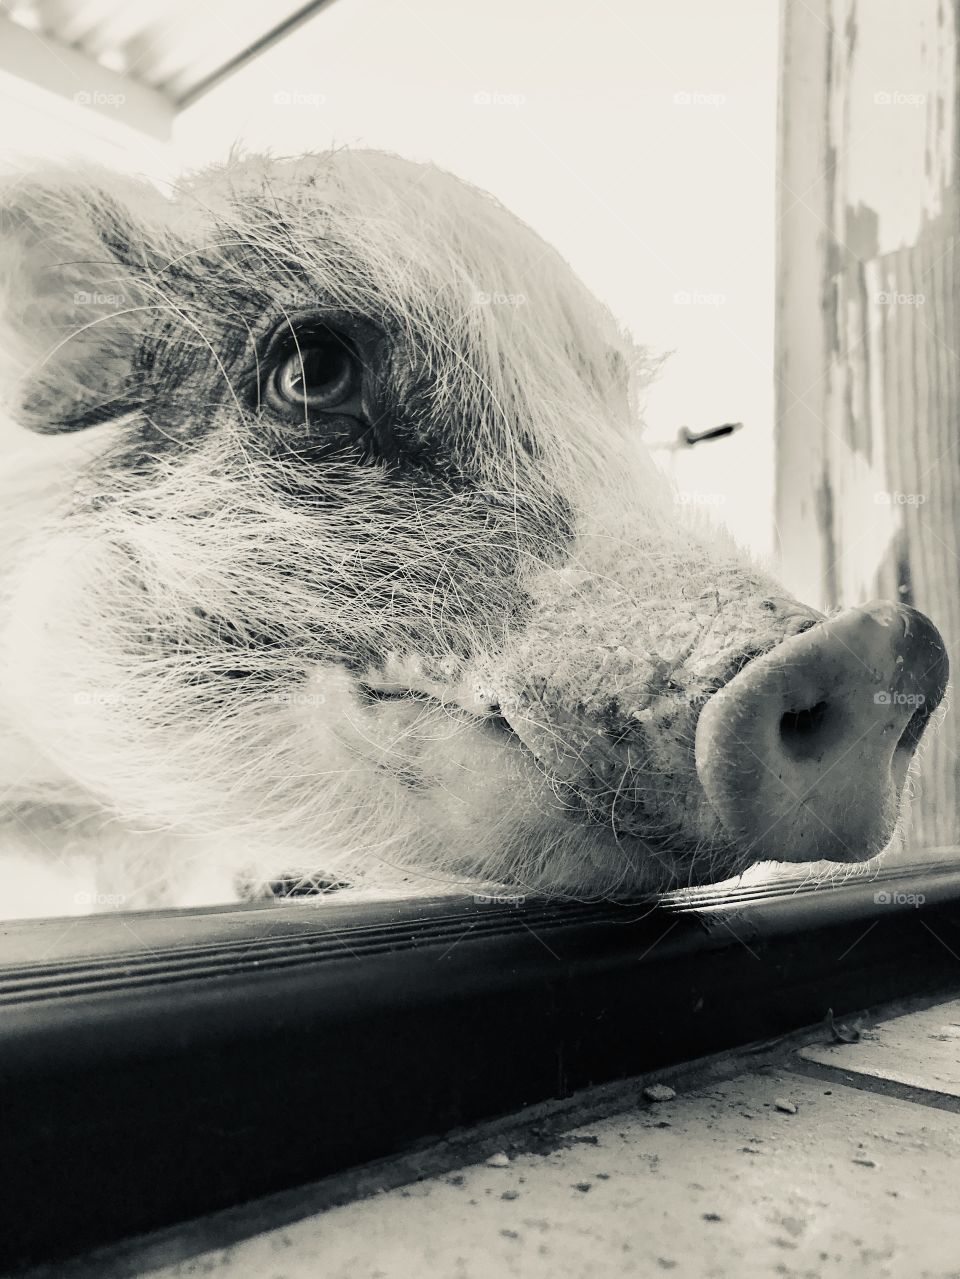 Pig life